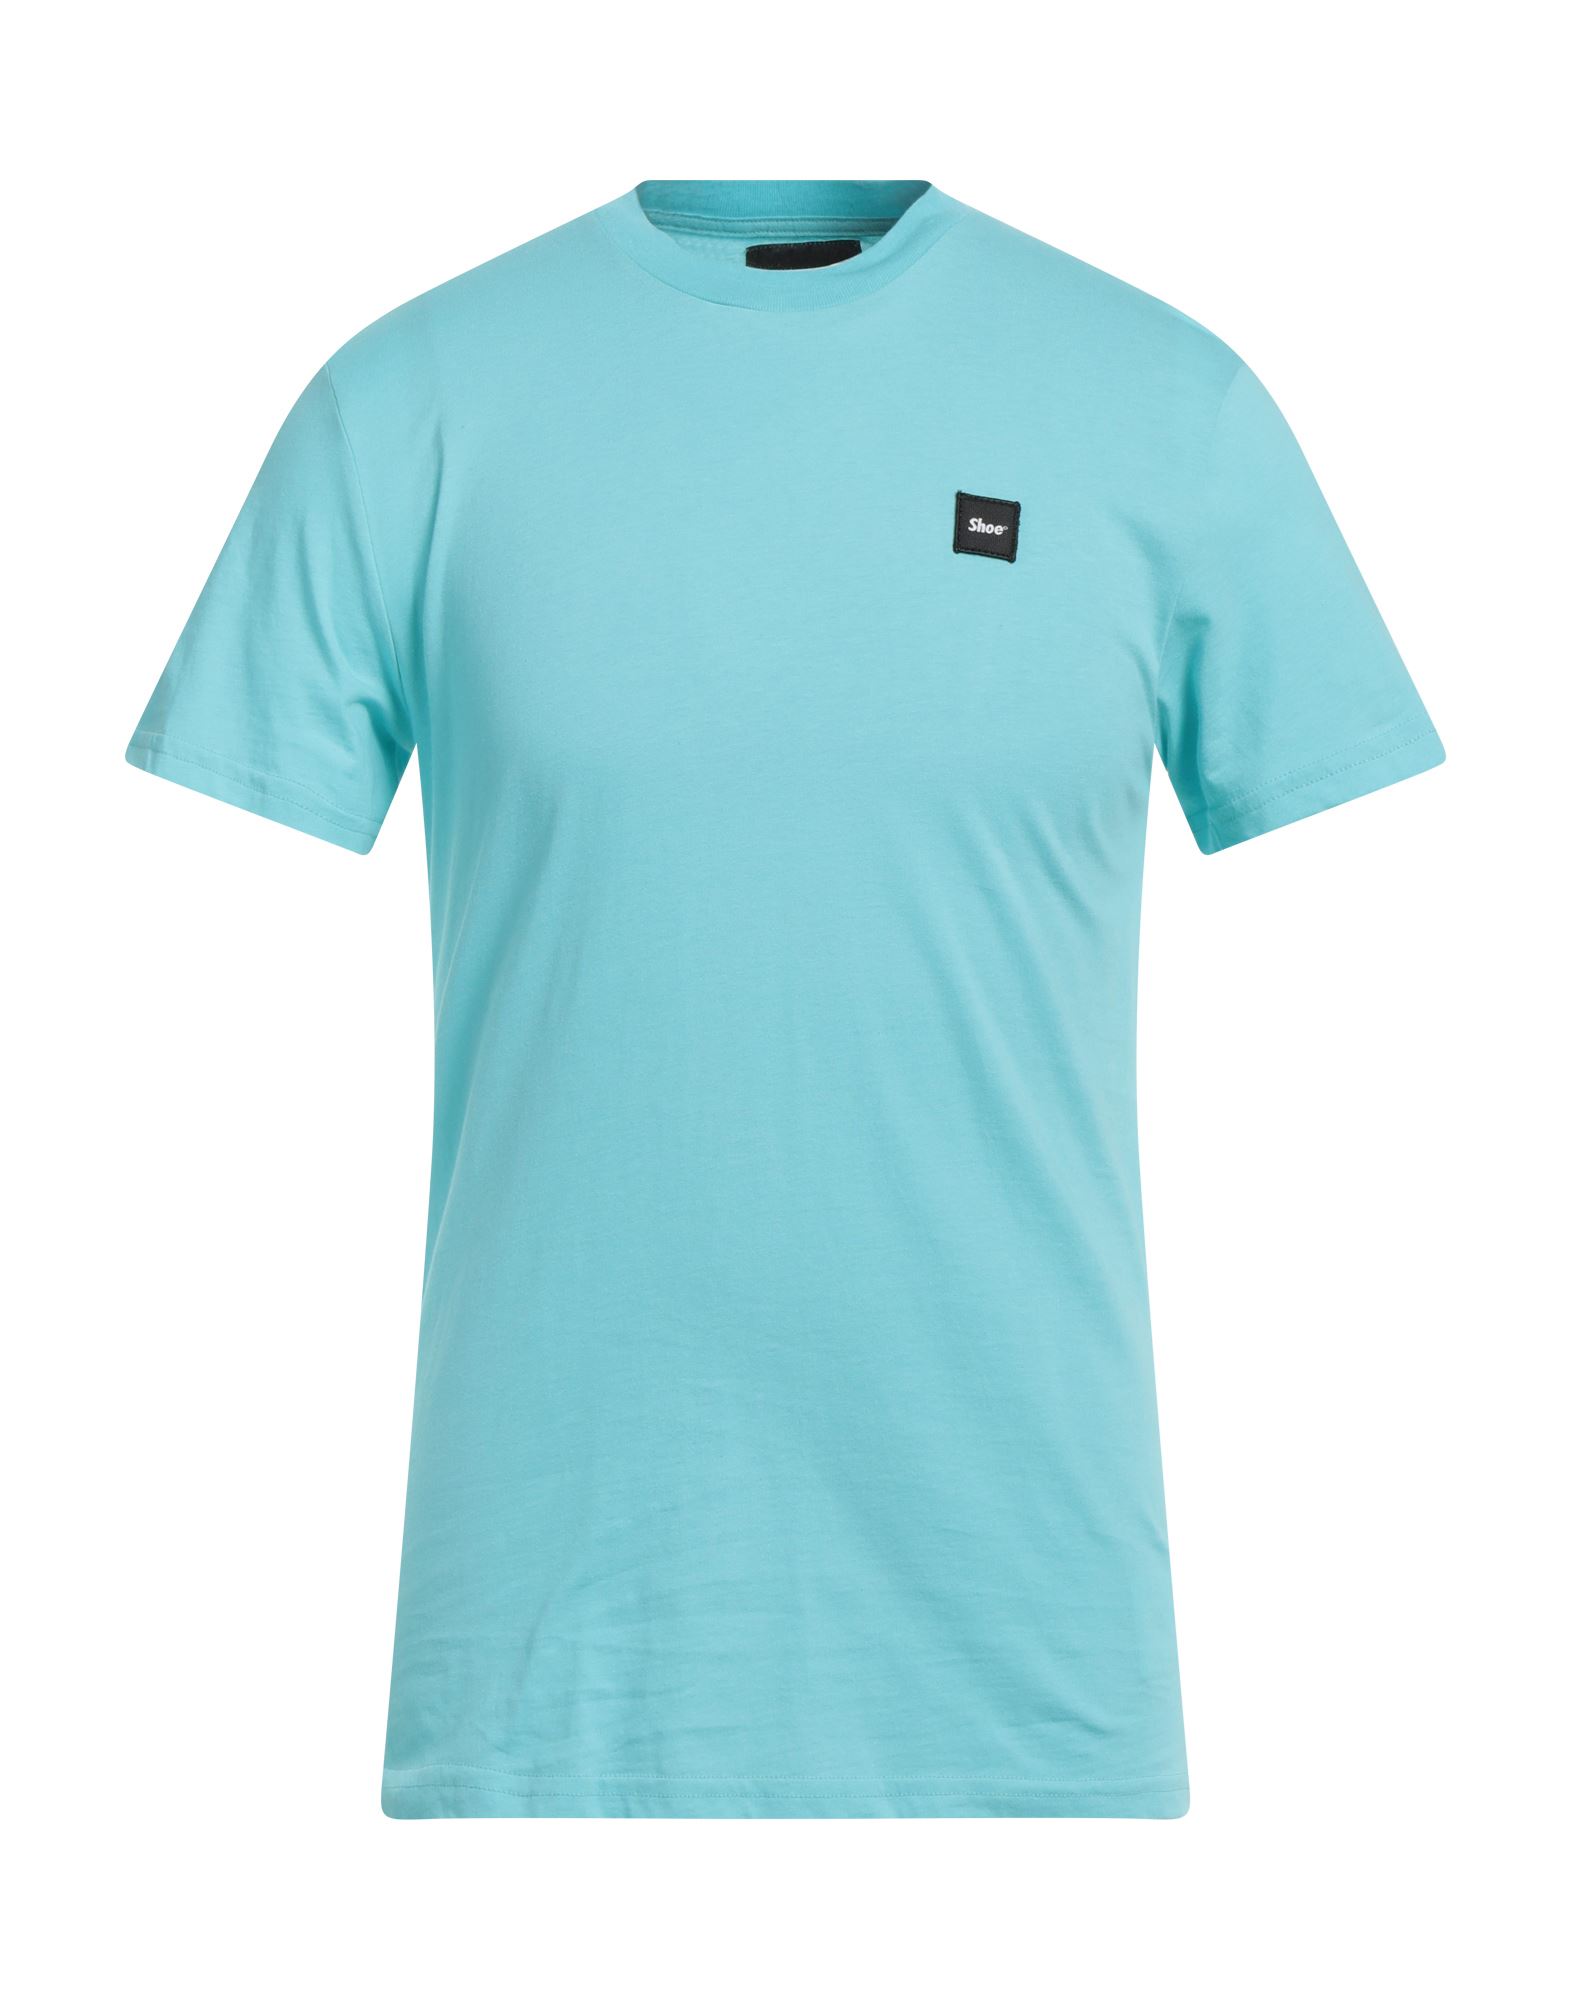 Shoe® Shoe Man T-shirt Turquoise Size 3xl Cotton In Blue